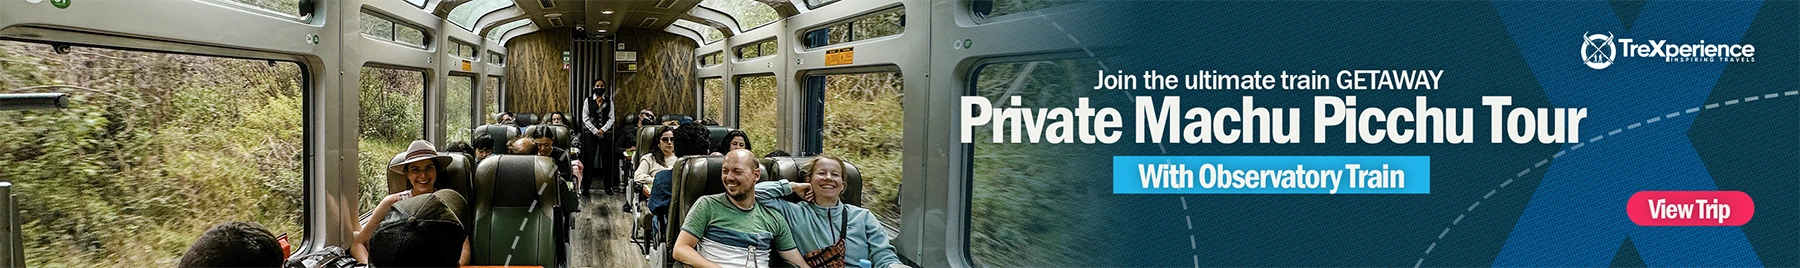 Machu Picchu Tour with Vistadome Train | TreXperience